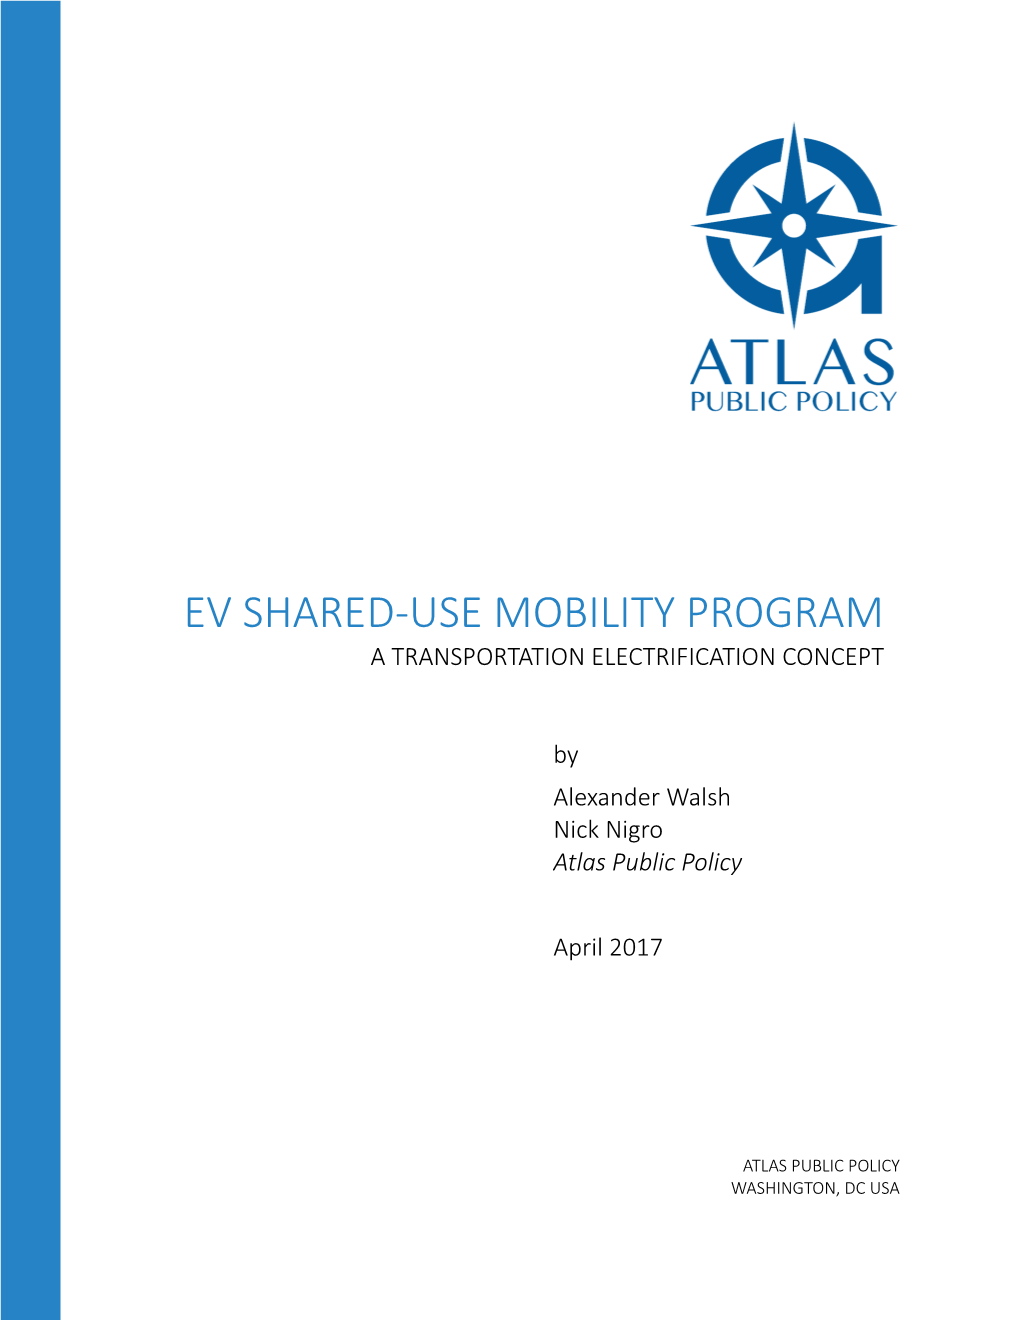 Ev Shared-Use Mobility Program a Transportation Electrification Concept